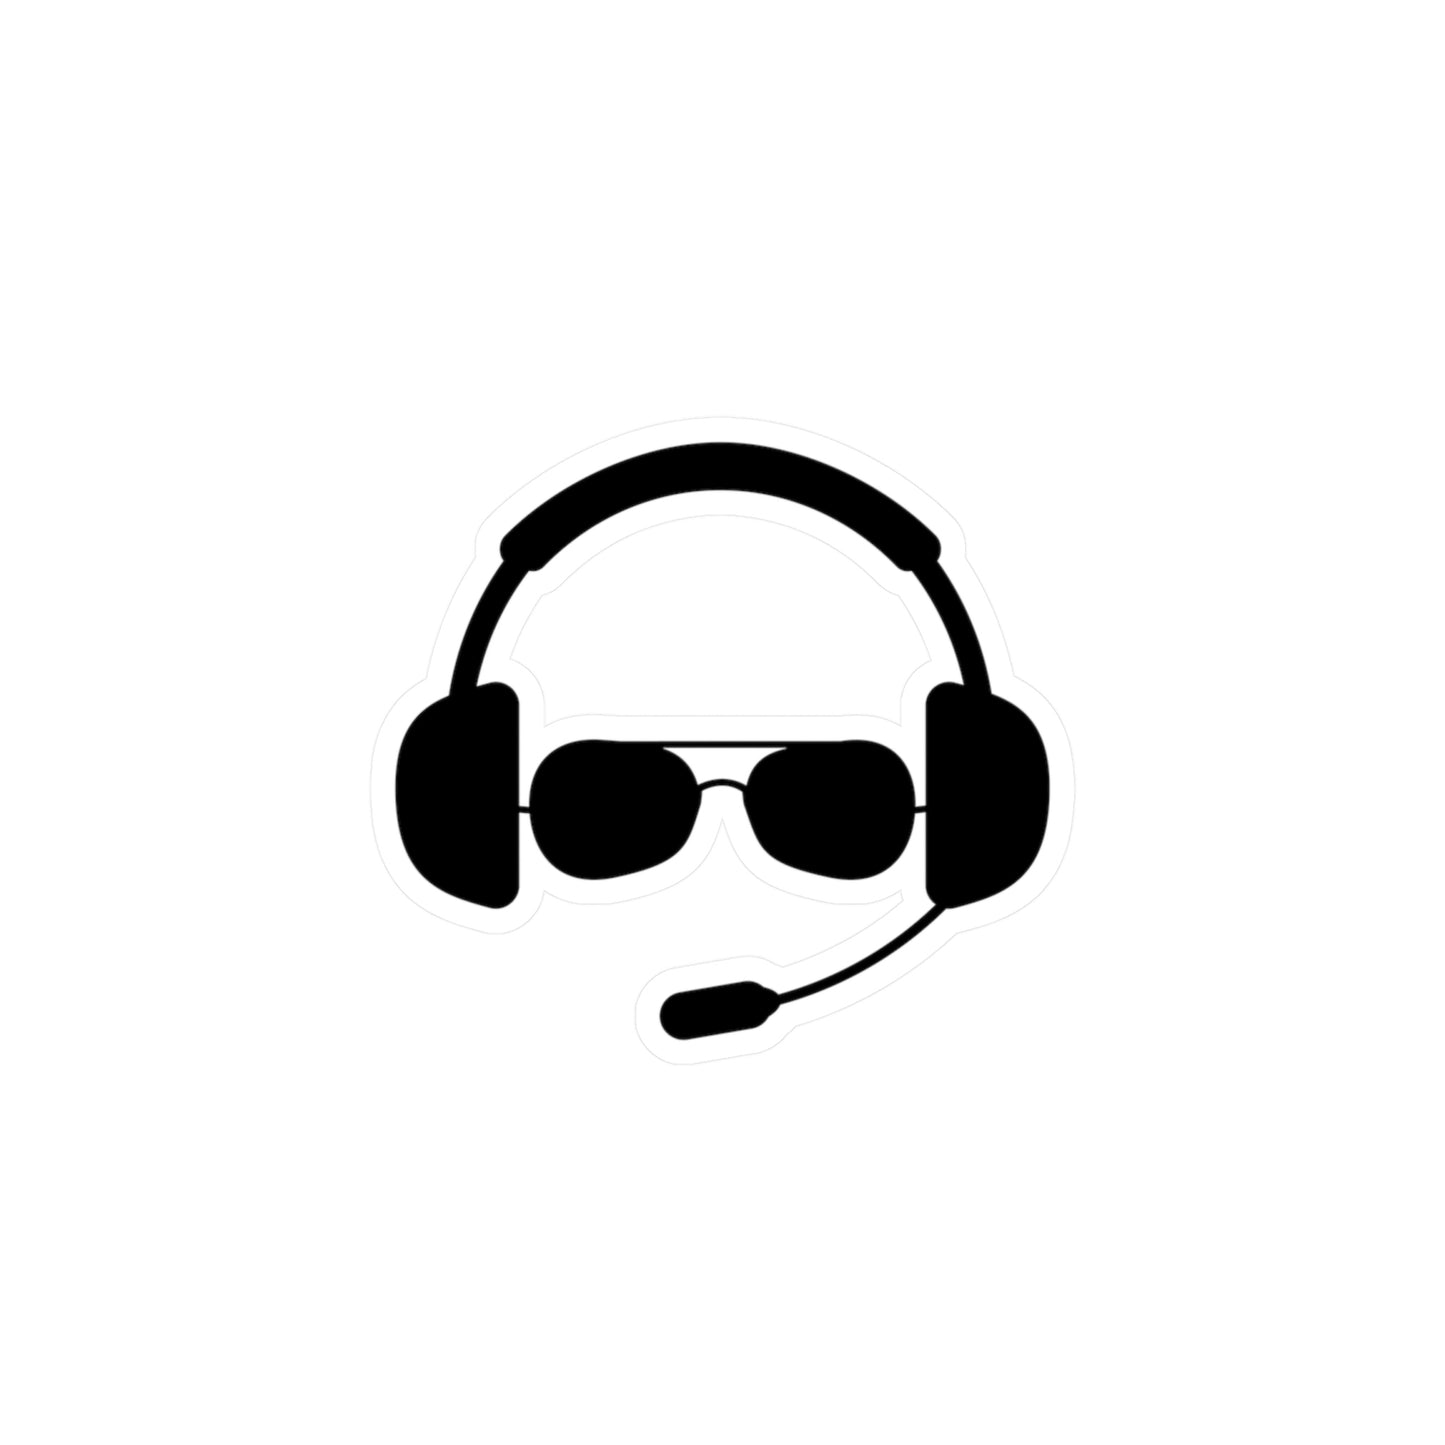 Pilot Headset and Sunglasses Sticker